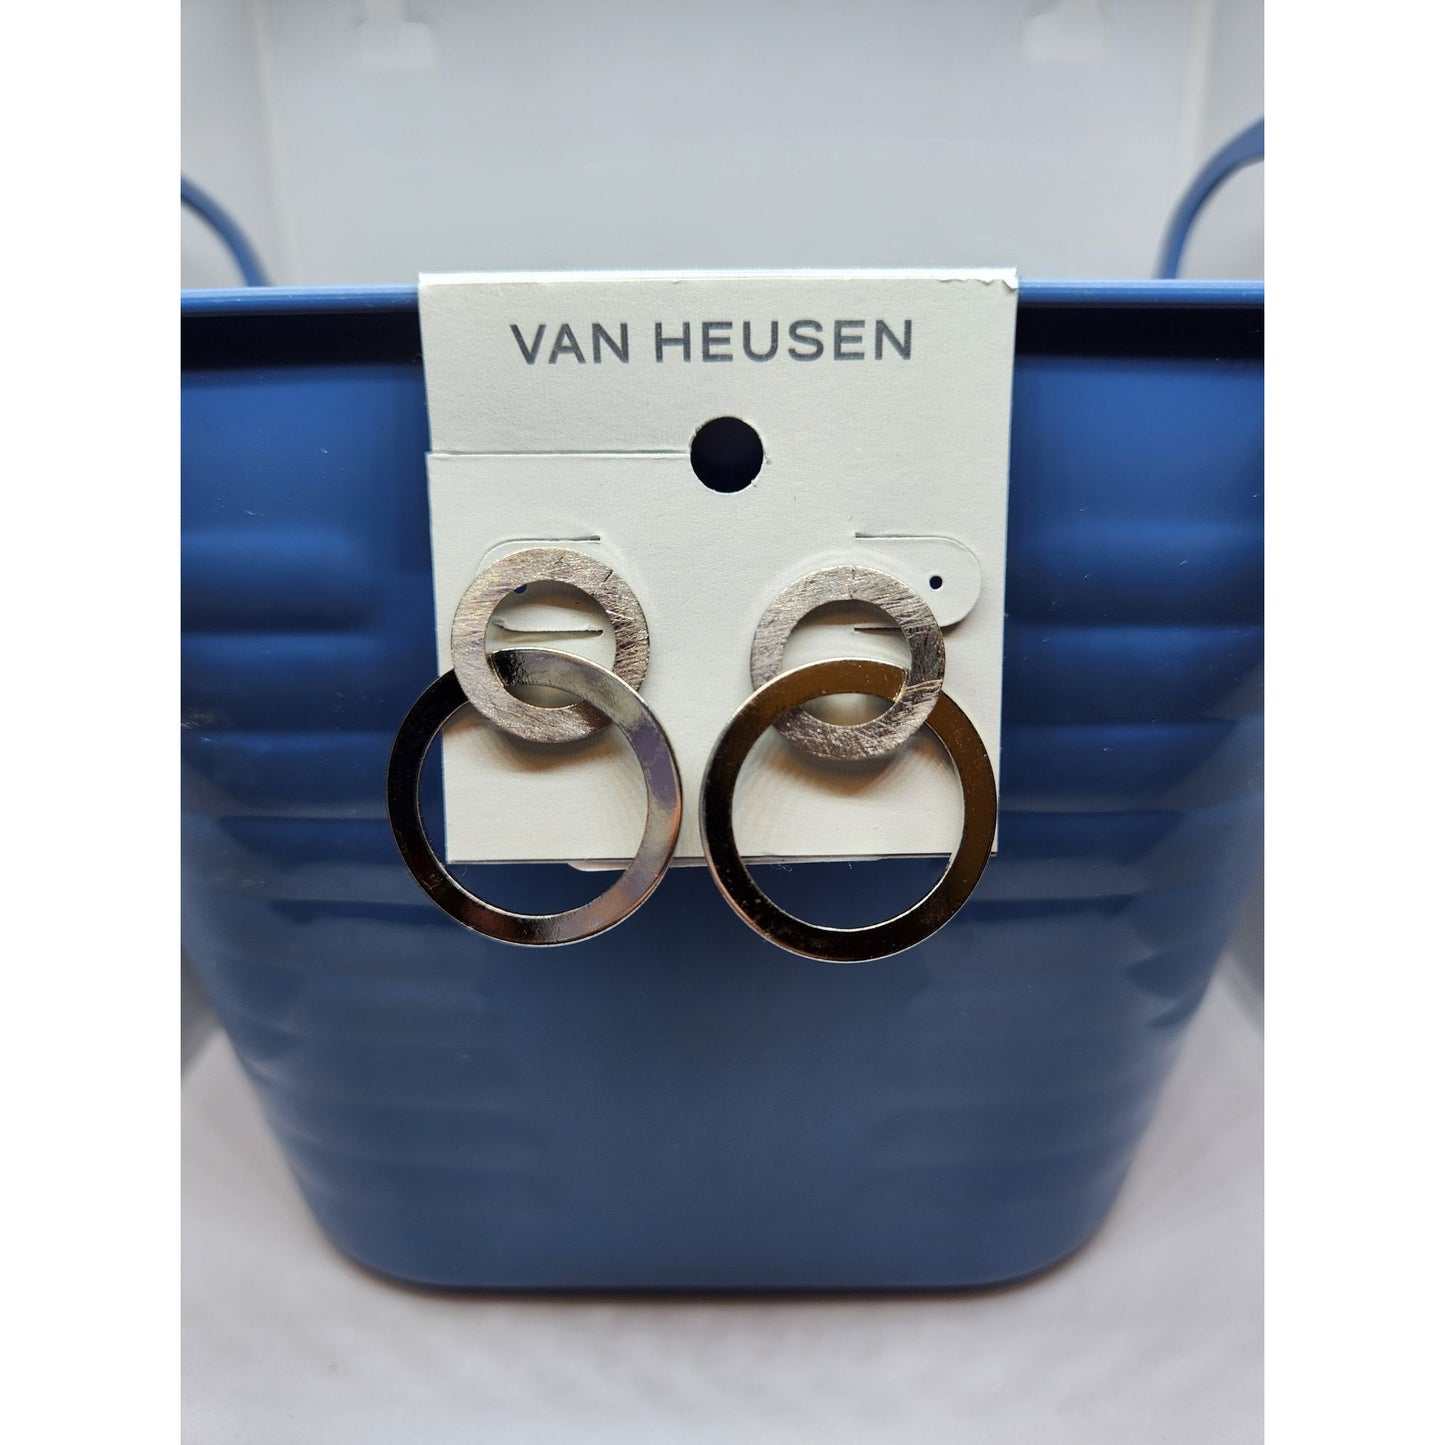 Van Heusen Silver Tone Round Double Circle Earrings